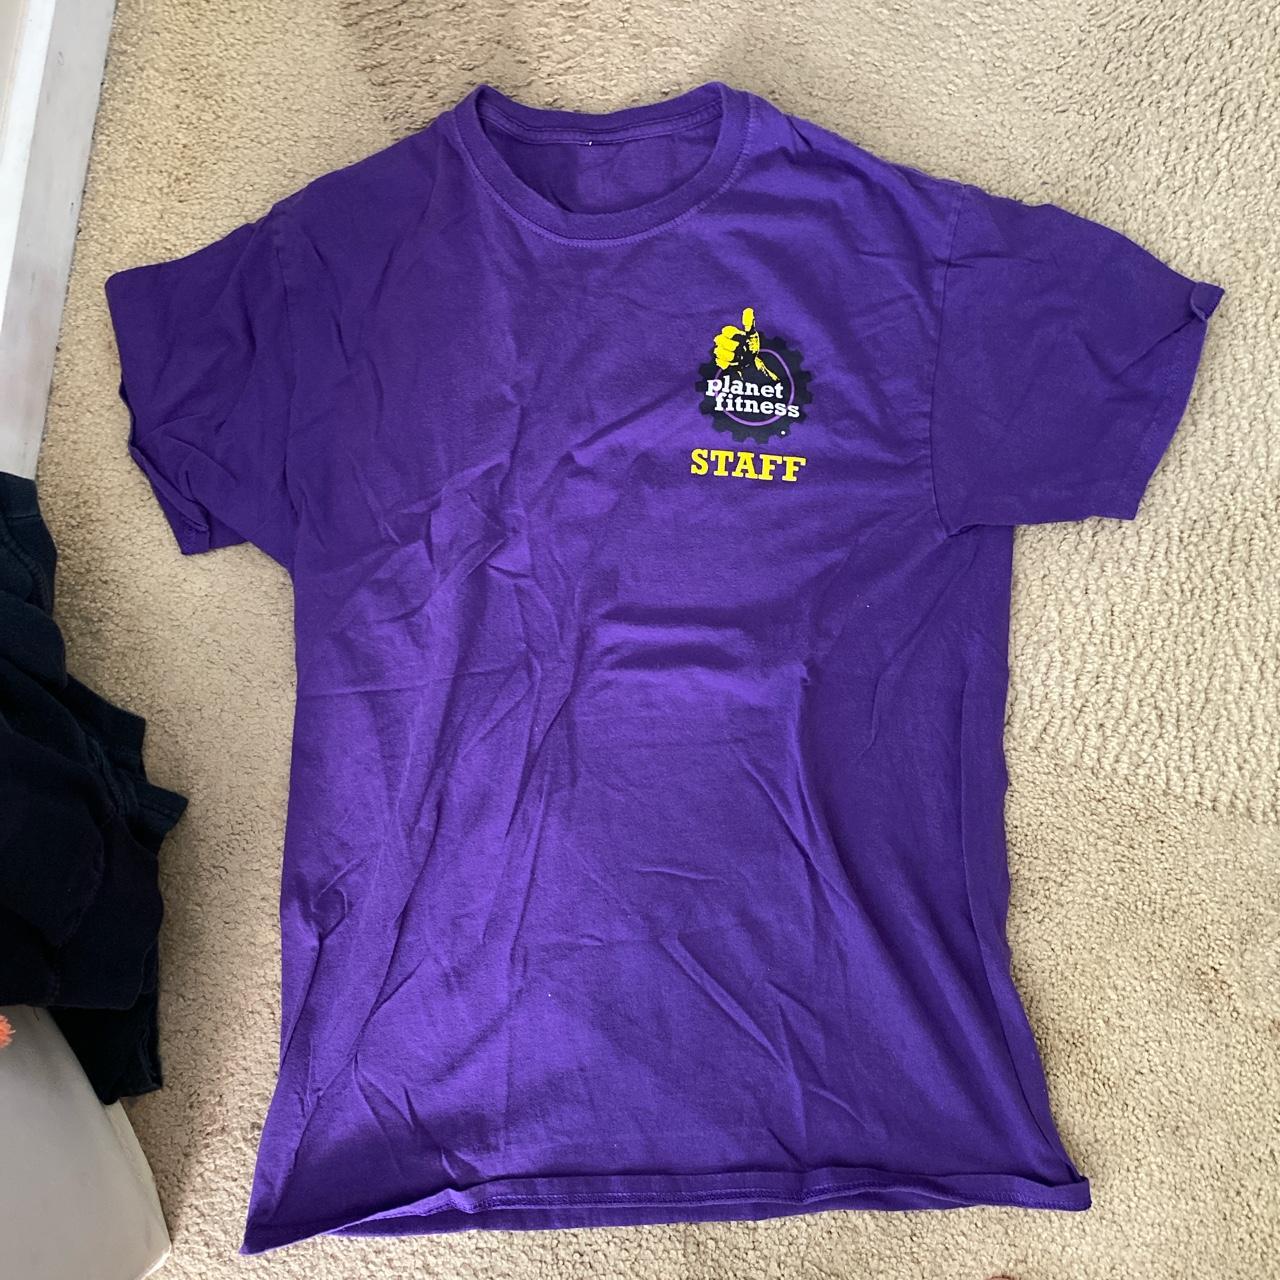 Planet fitness staff shirt I thrifted - Depop